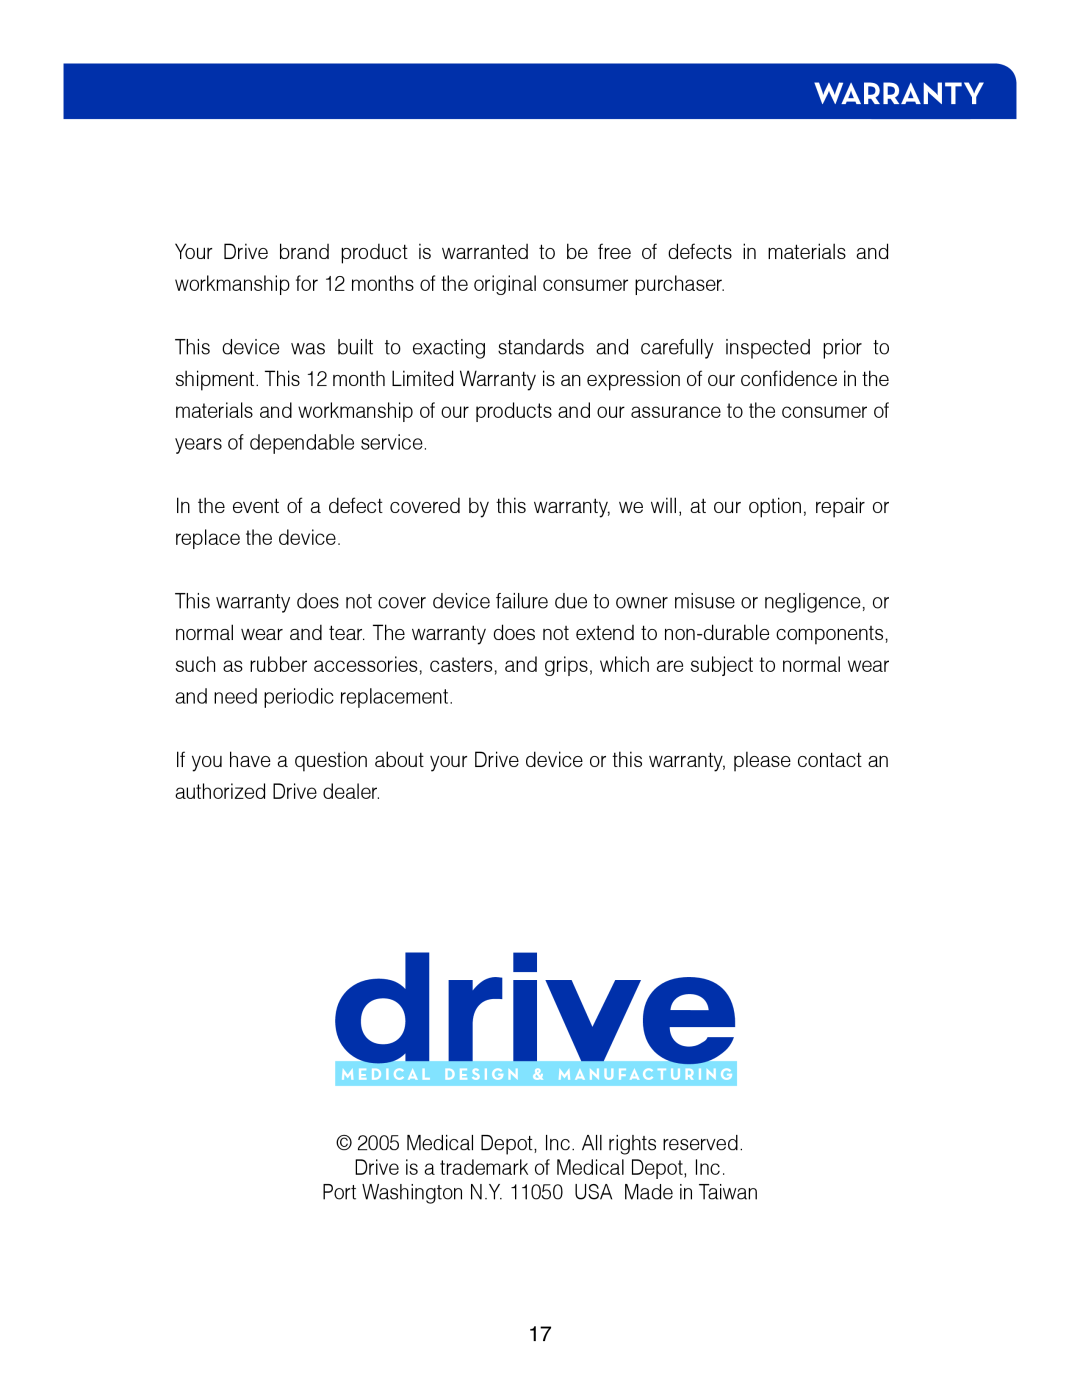 Drive Medical Design 14027 manual Warranty 